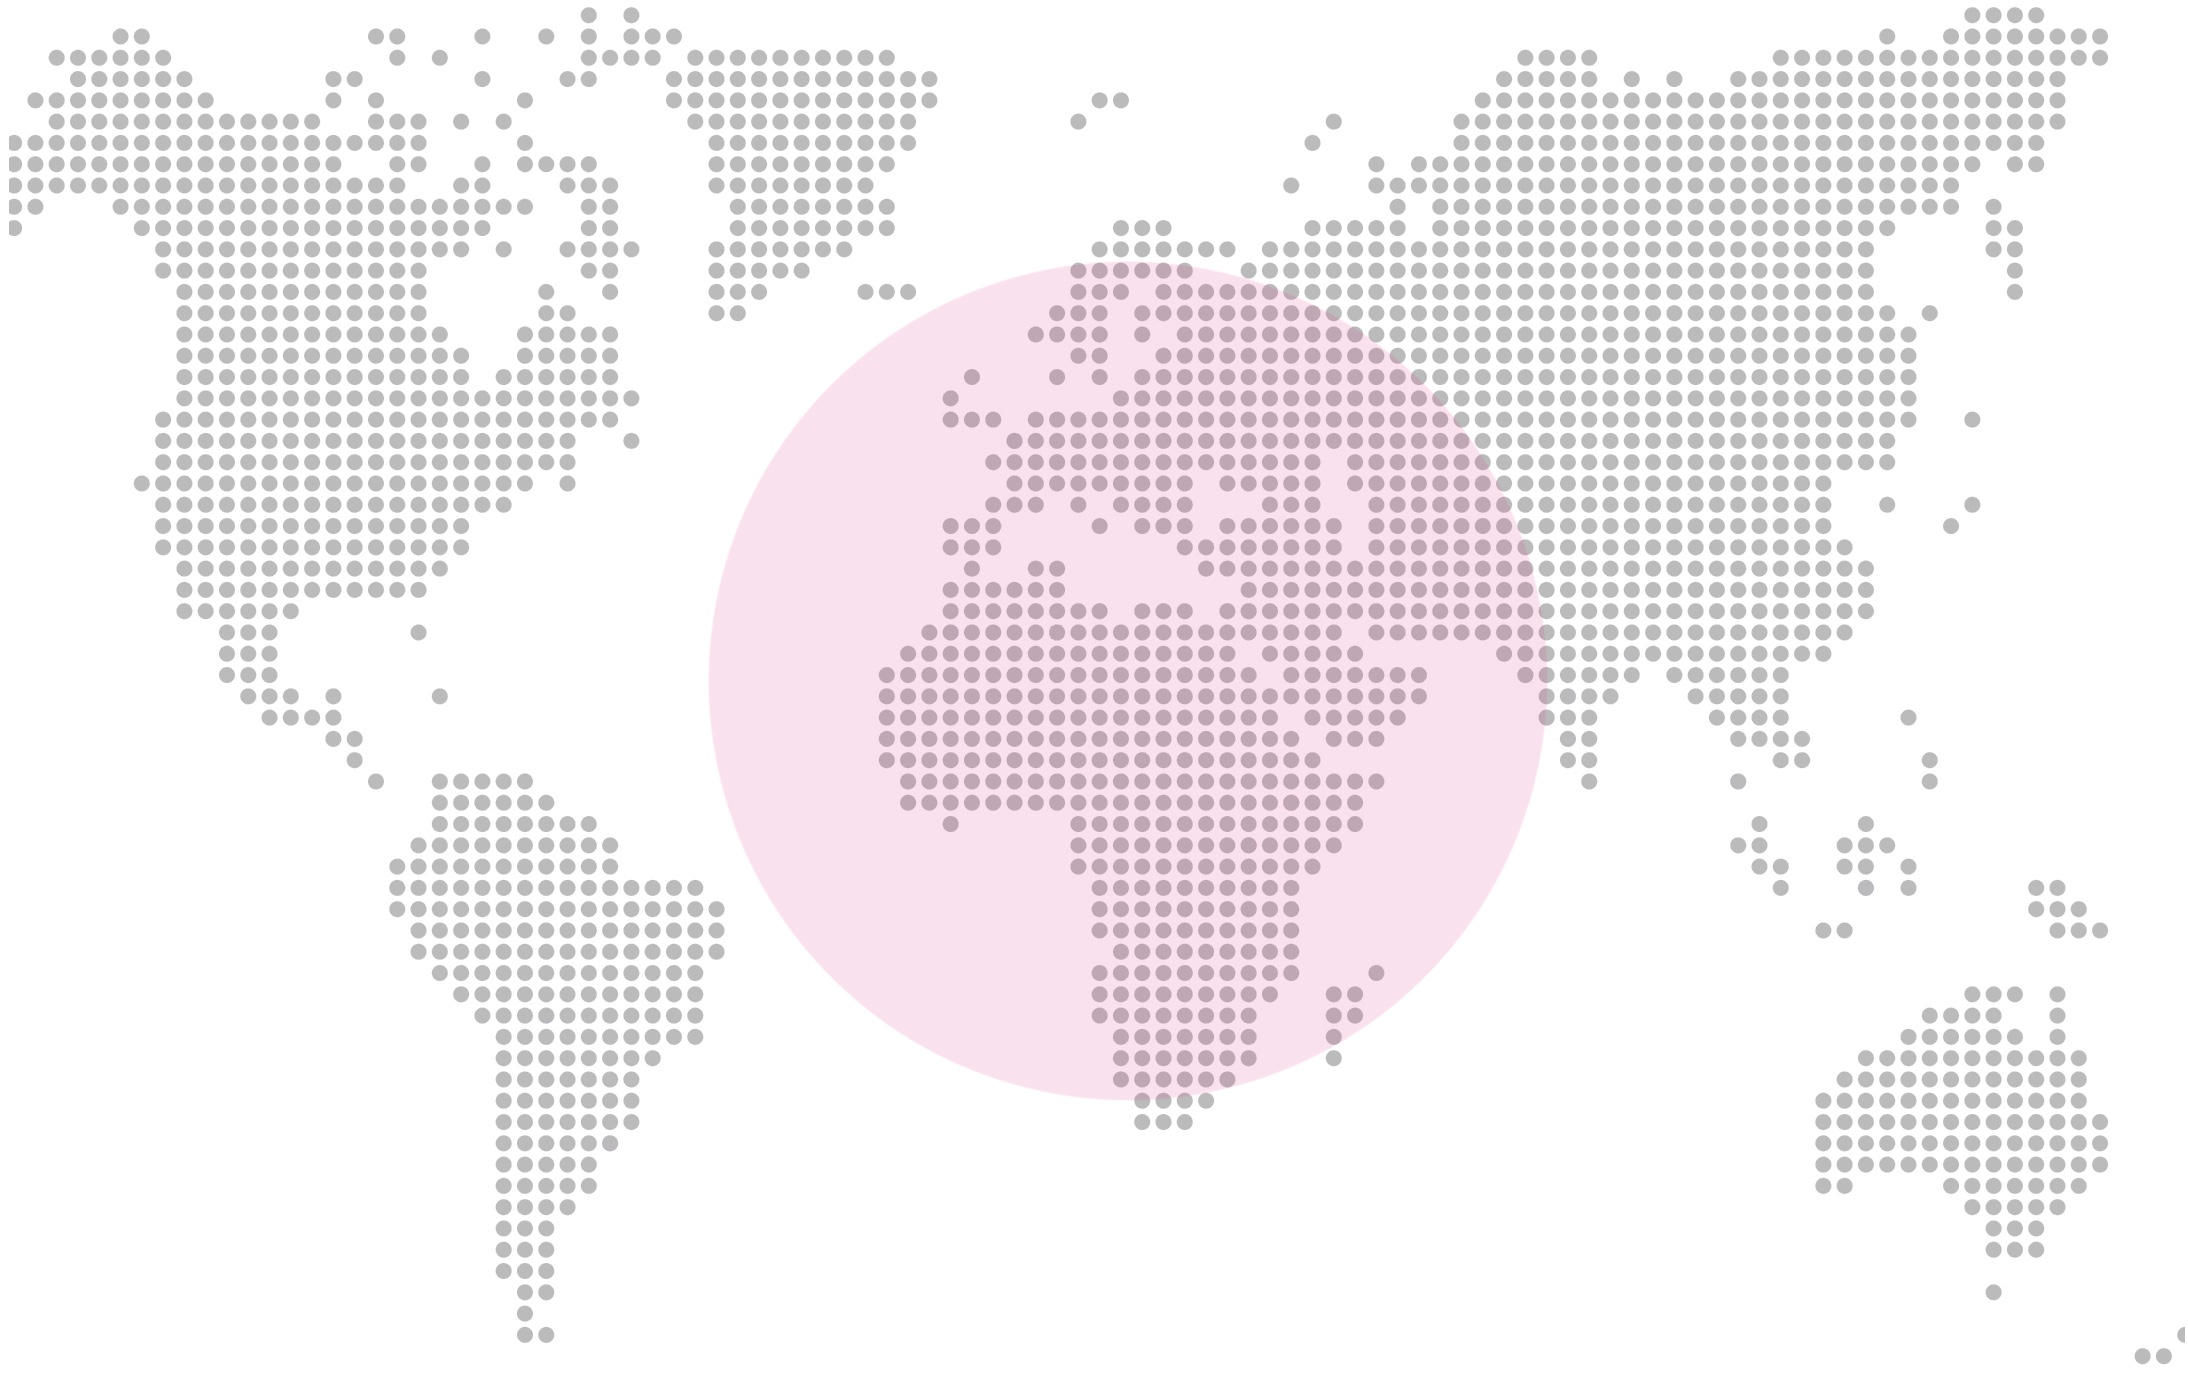 World map - Global pin